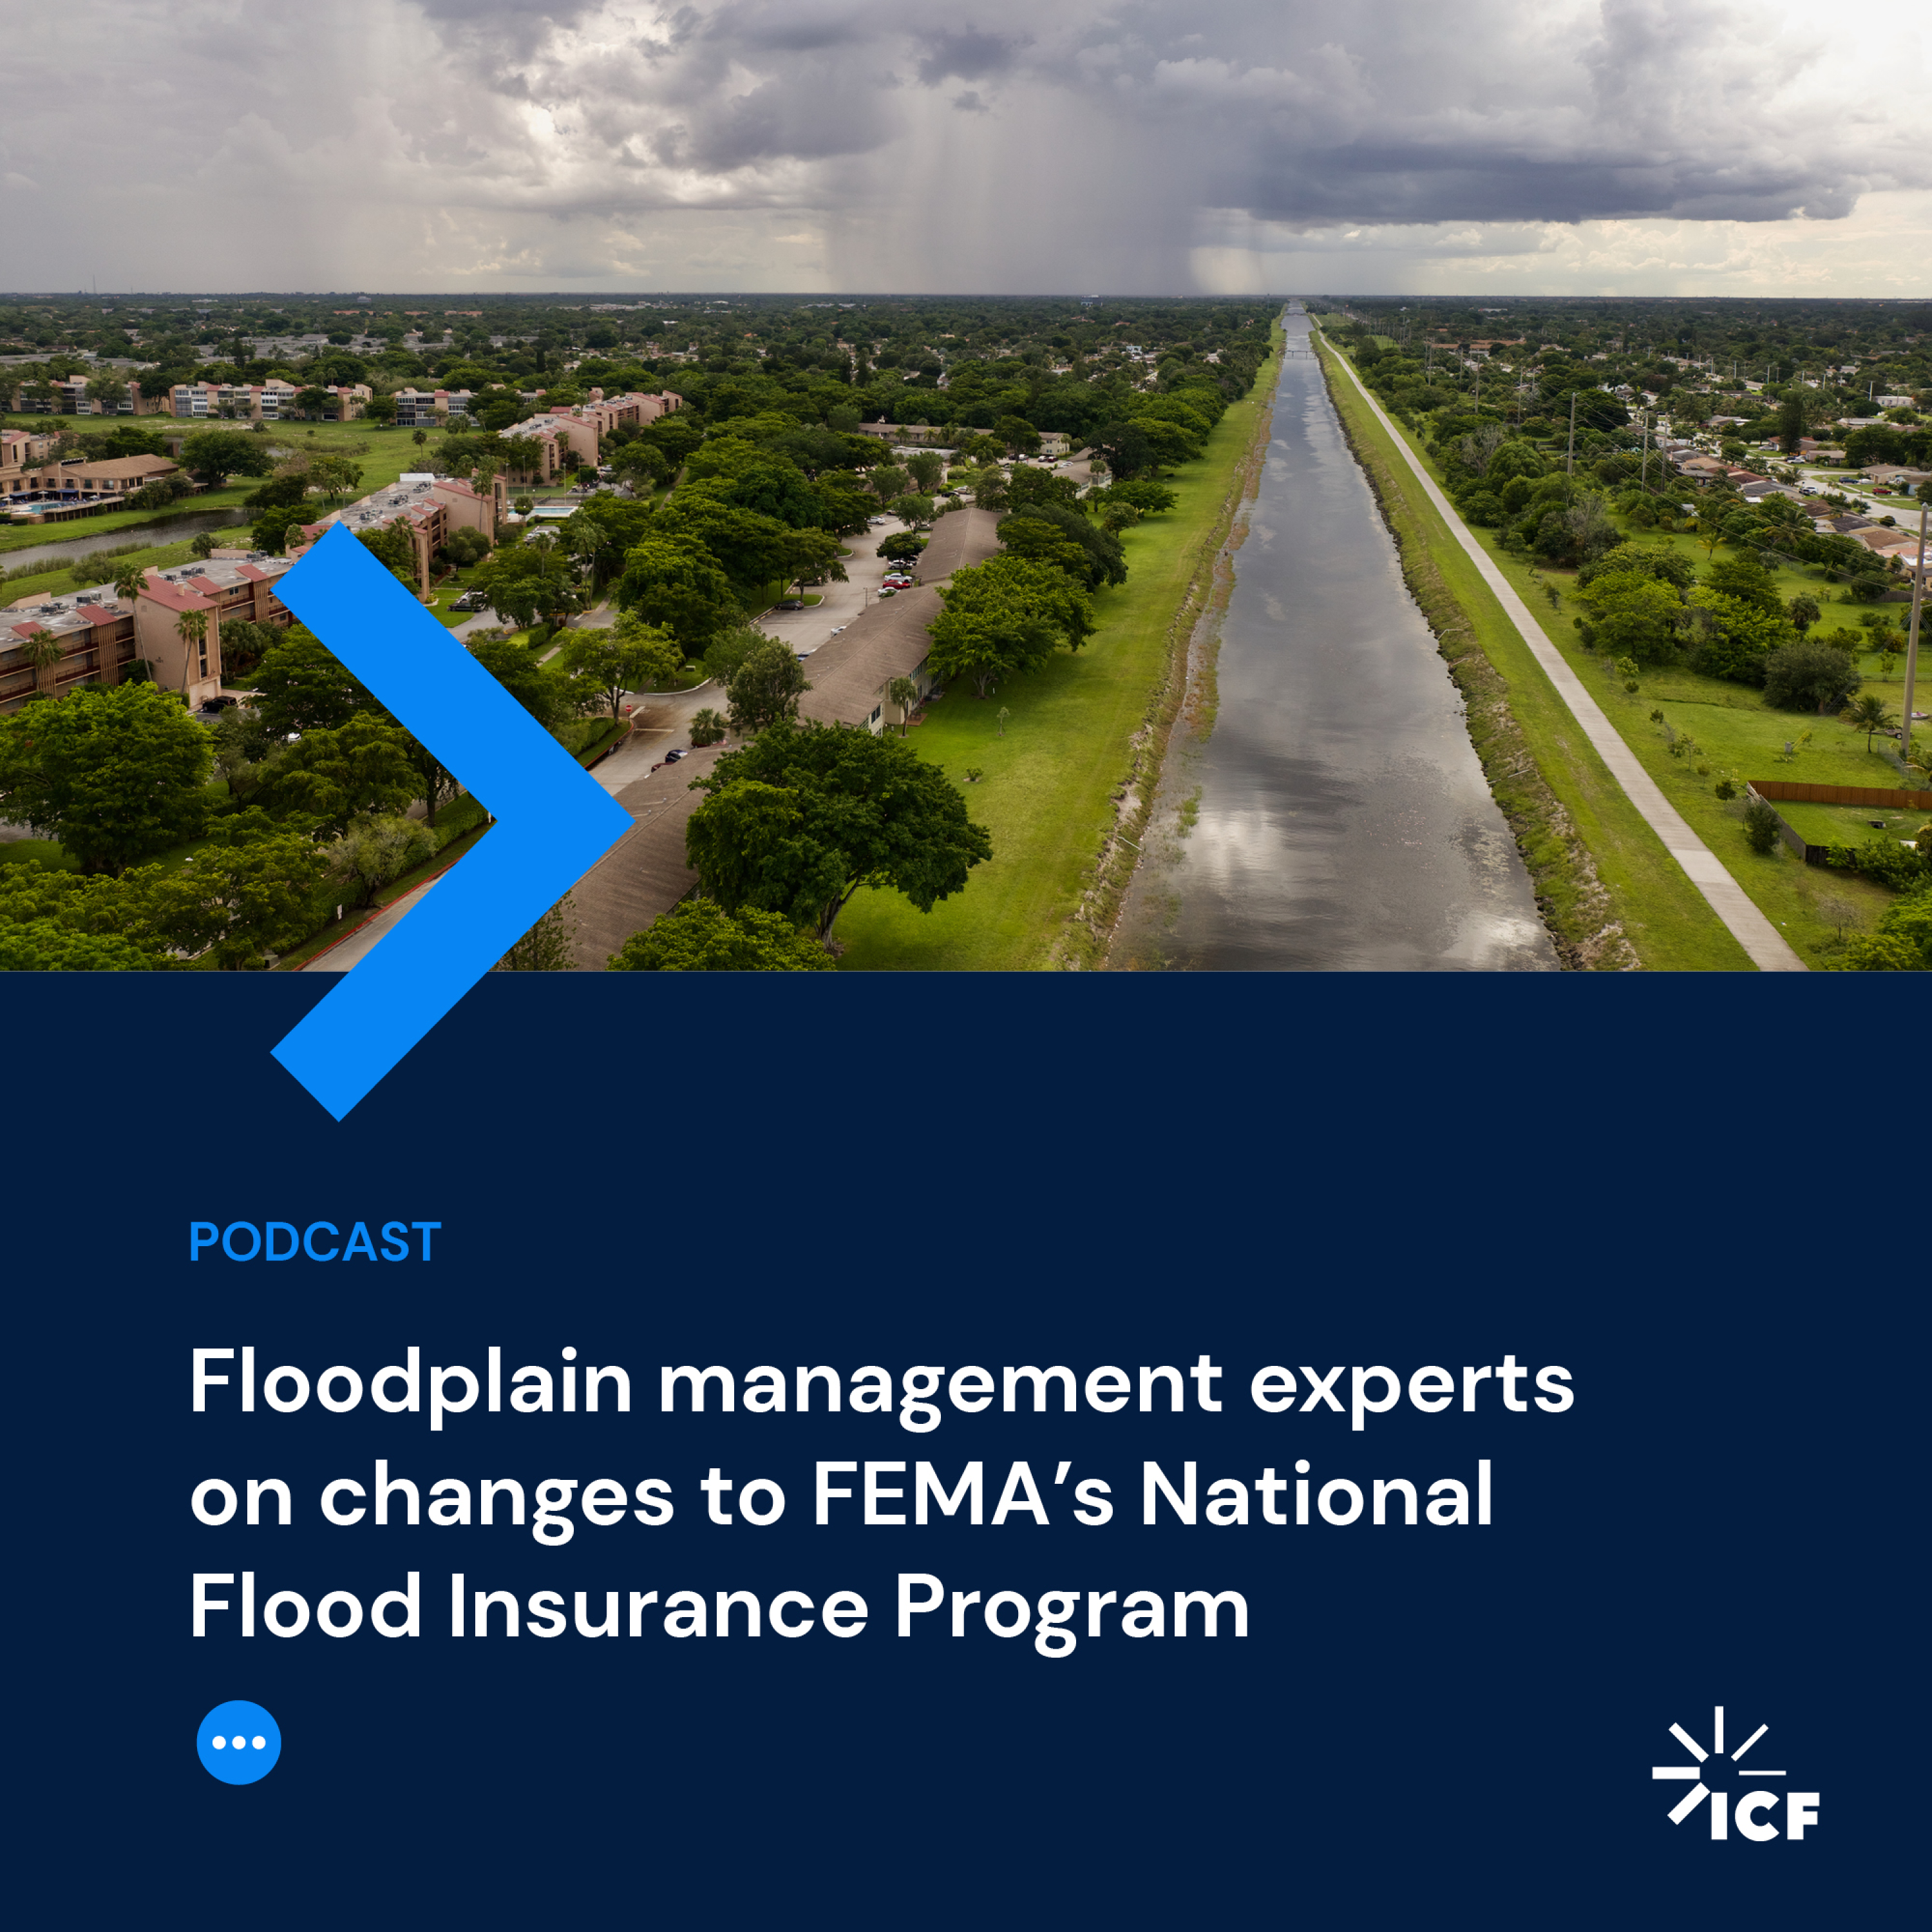 Floodplain management experts on changes to FEMA's National Flood Insurance Program